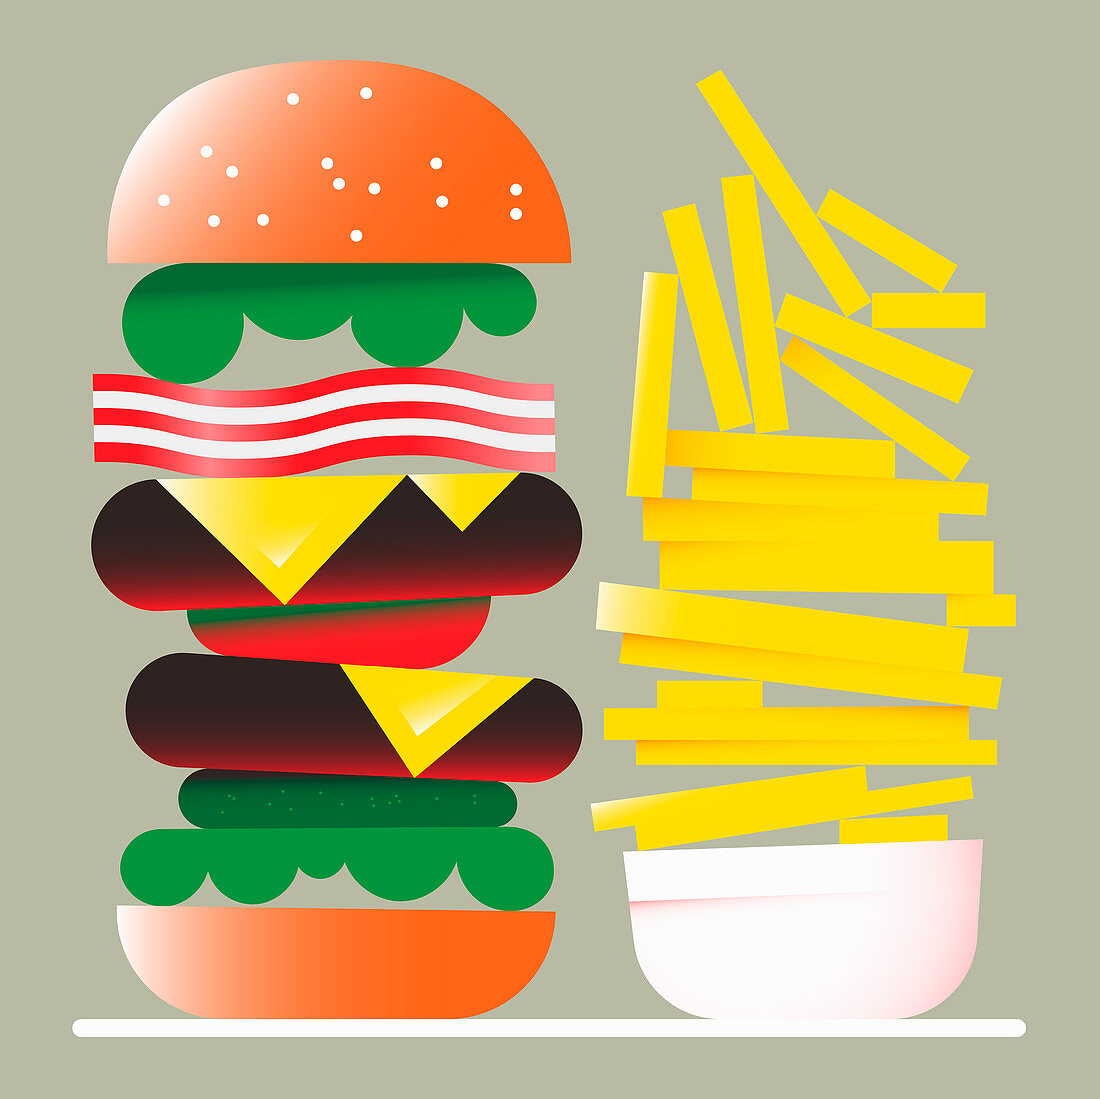 Hamburger and chips, illustration